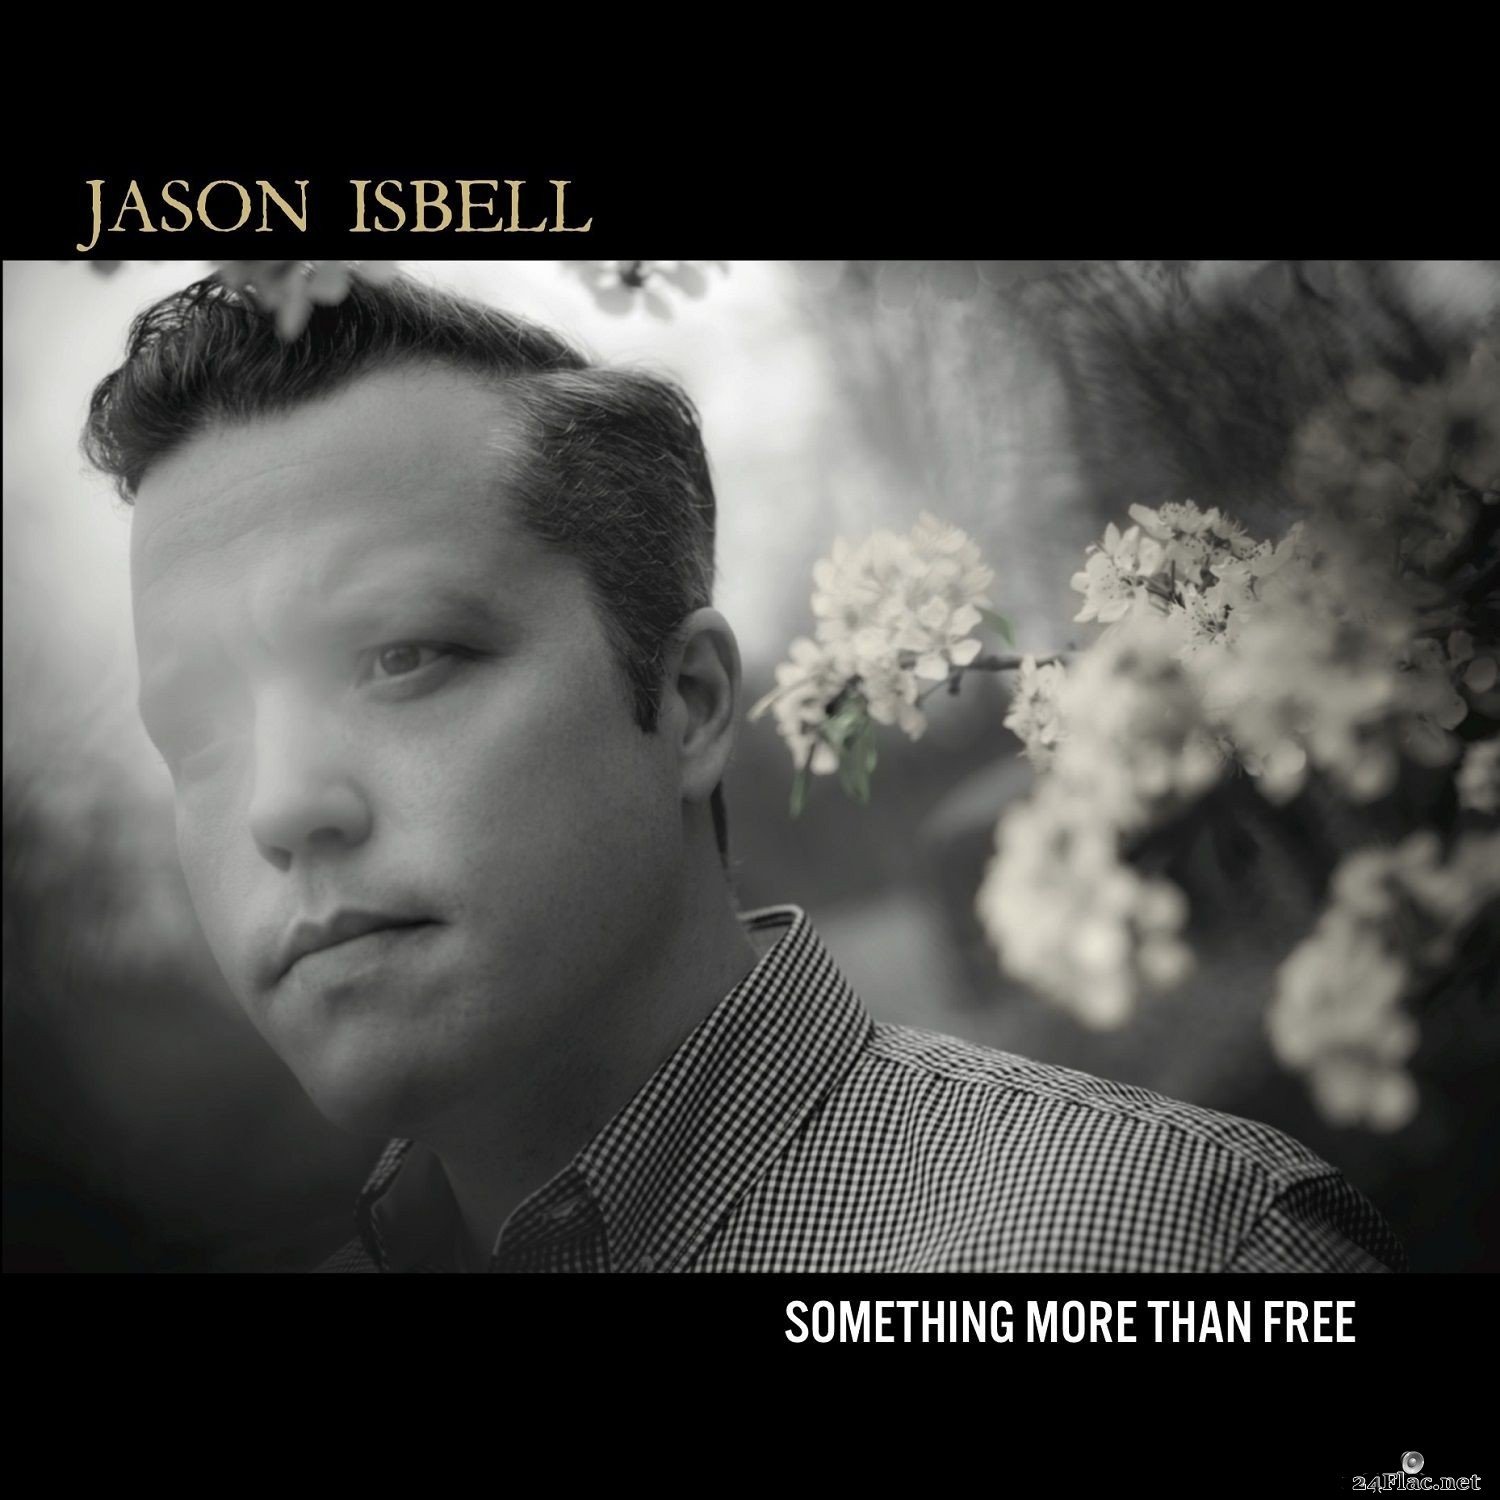 Jason Isbell - Something More Than Free (2015) Hi-Res